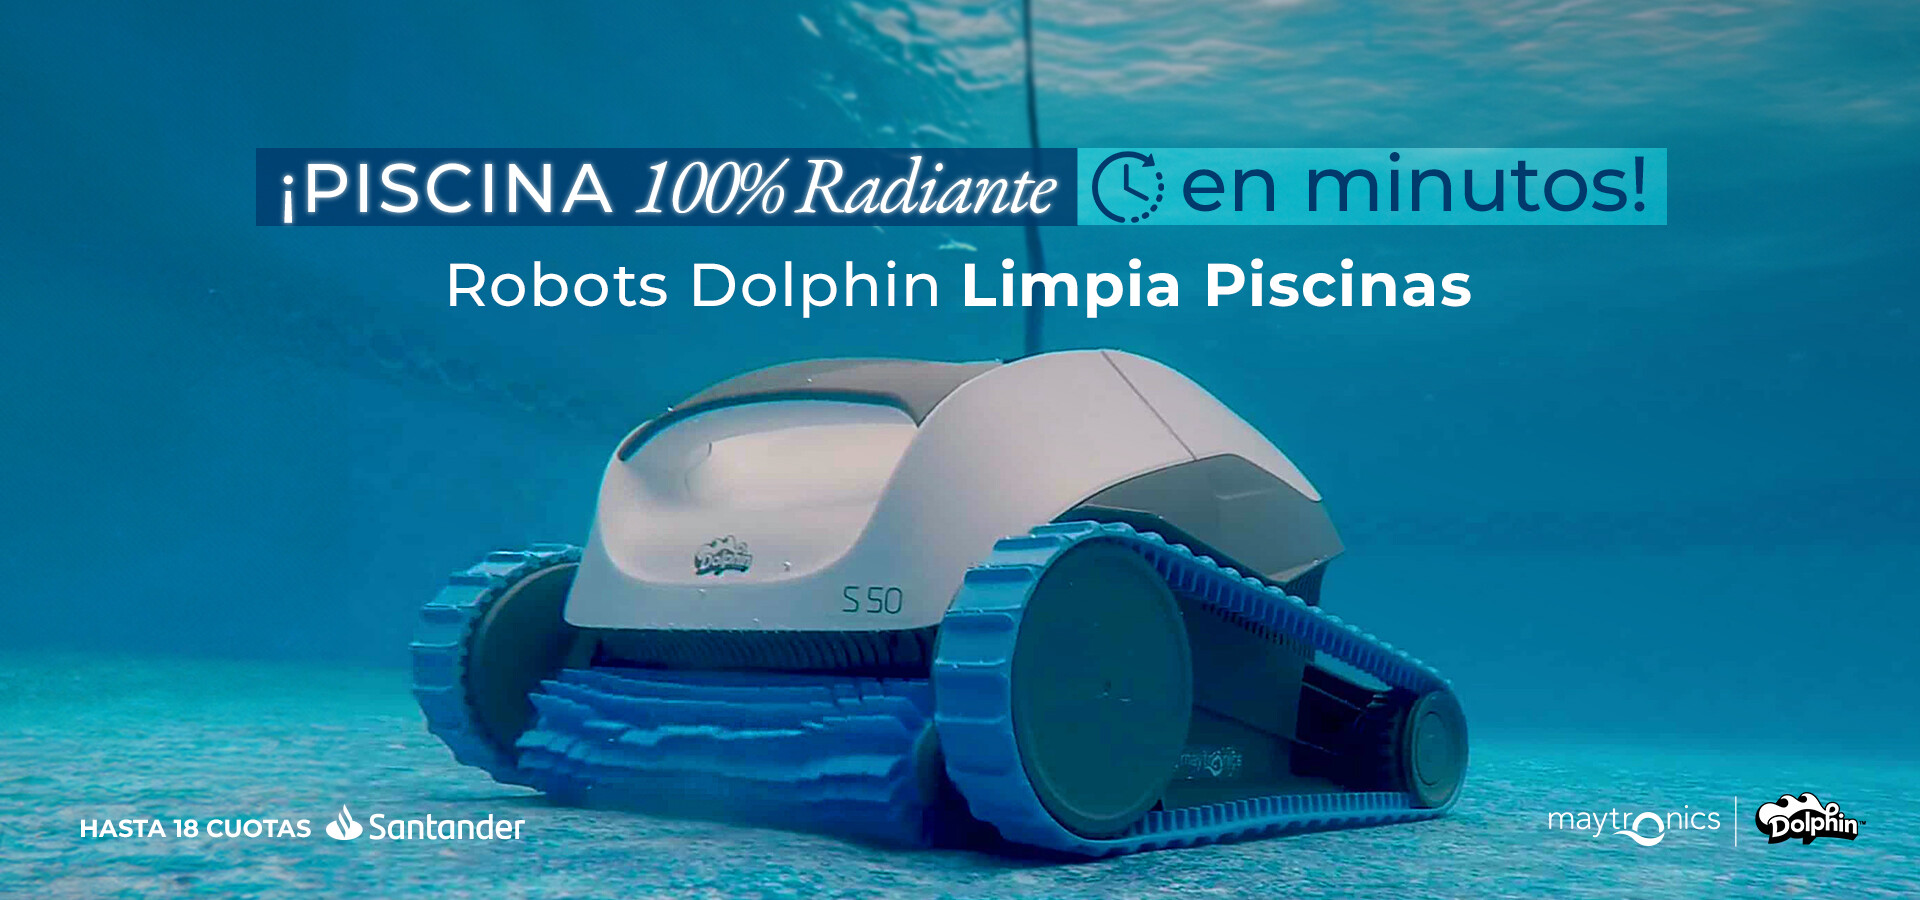 Robots Dolphin Limpia Piscinas